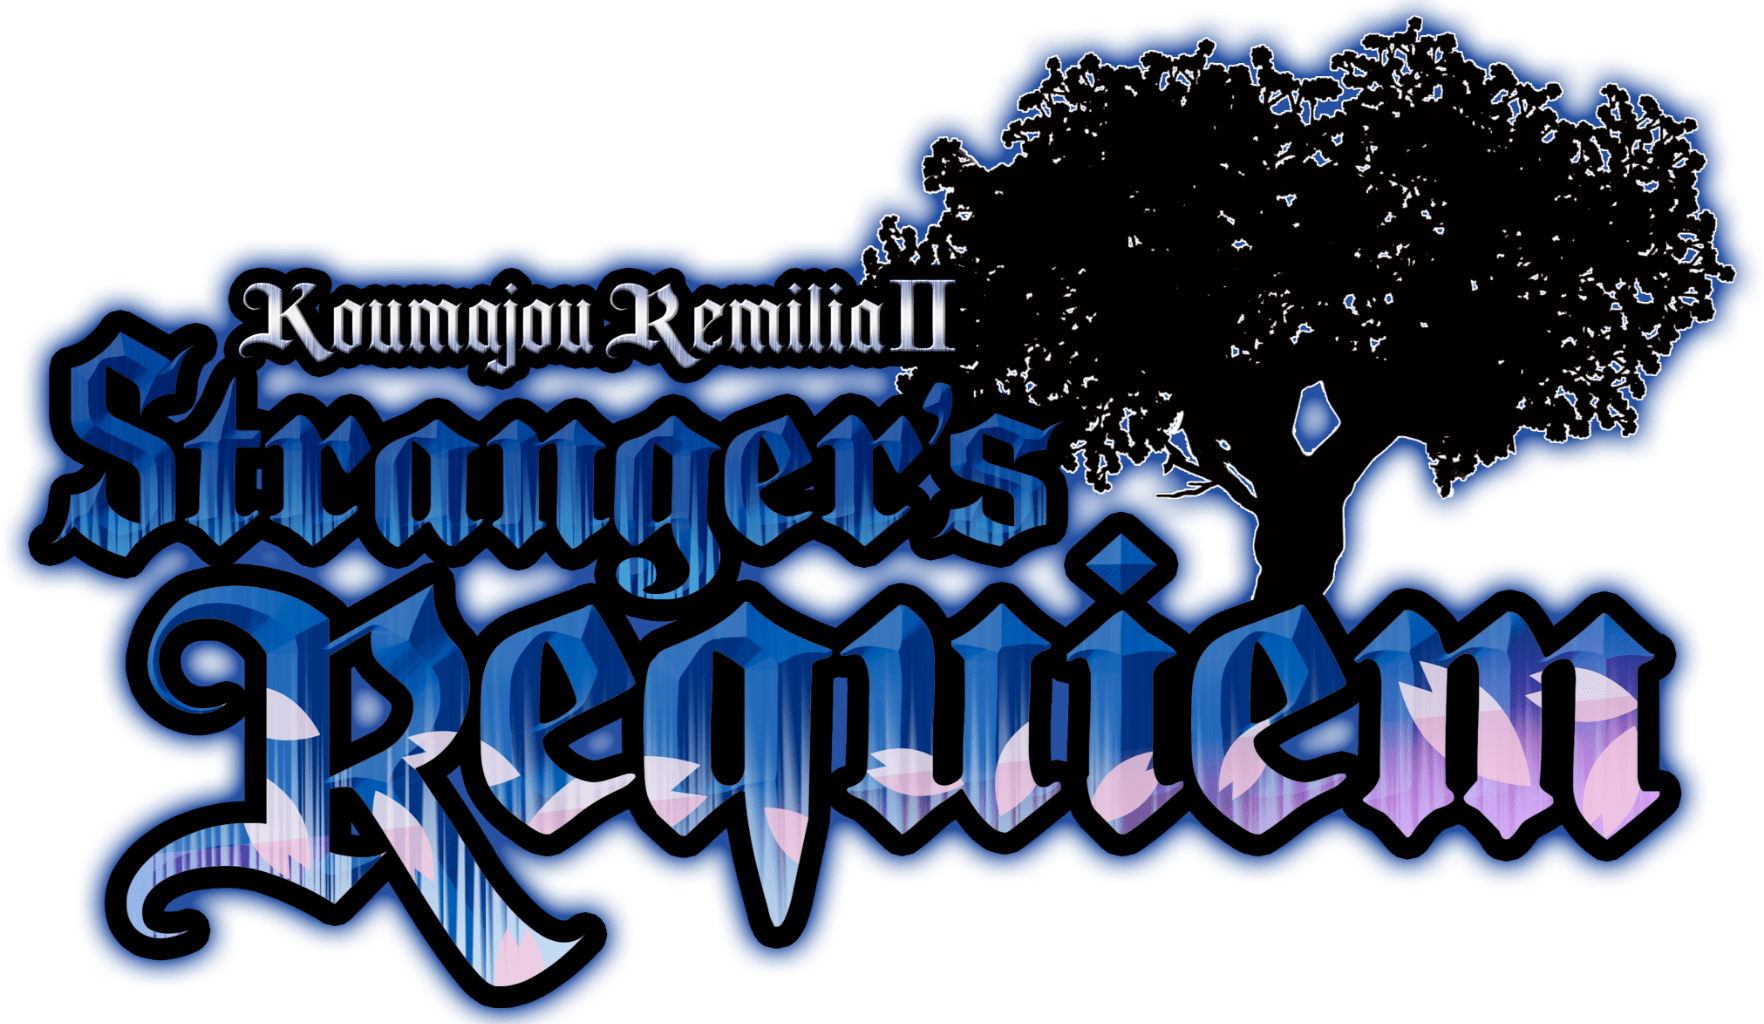 Koumajou Remilia II Stranger's Requiem